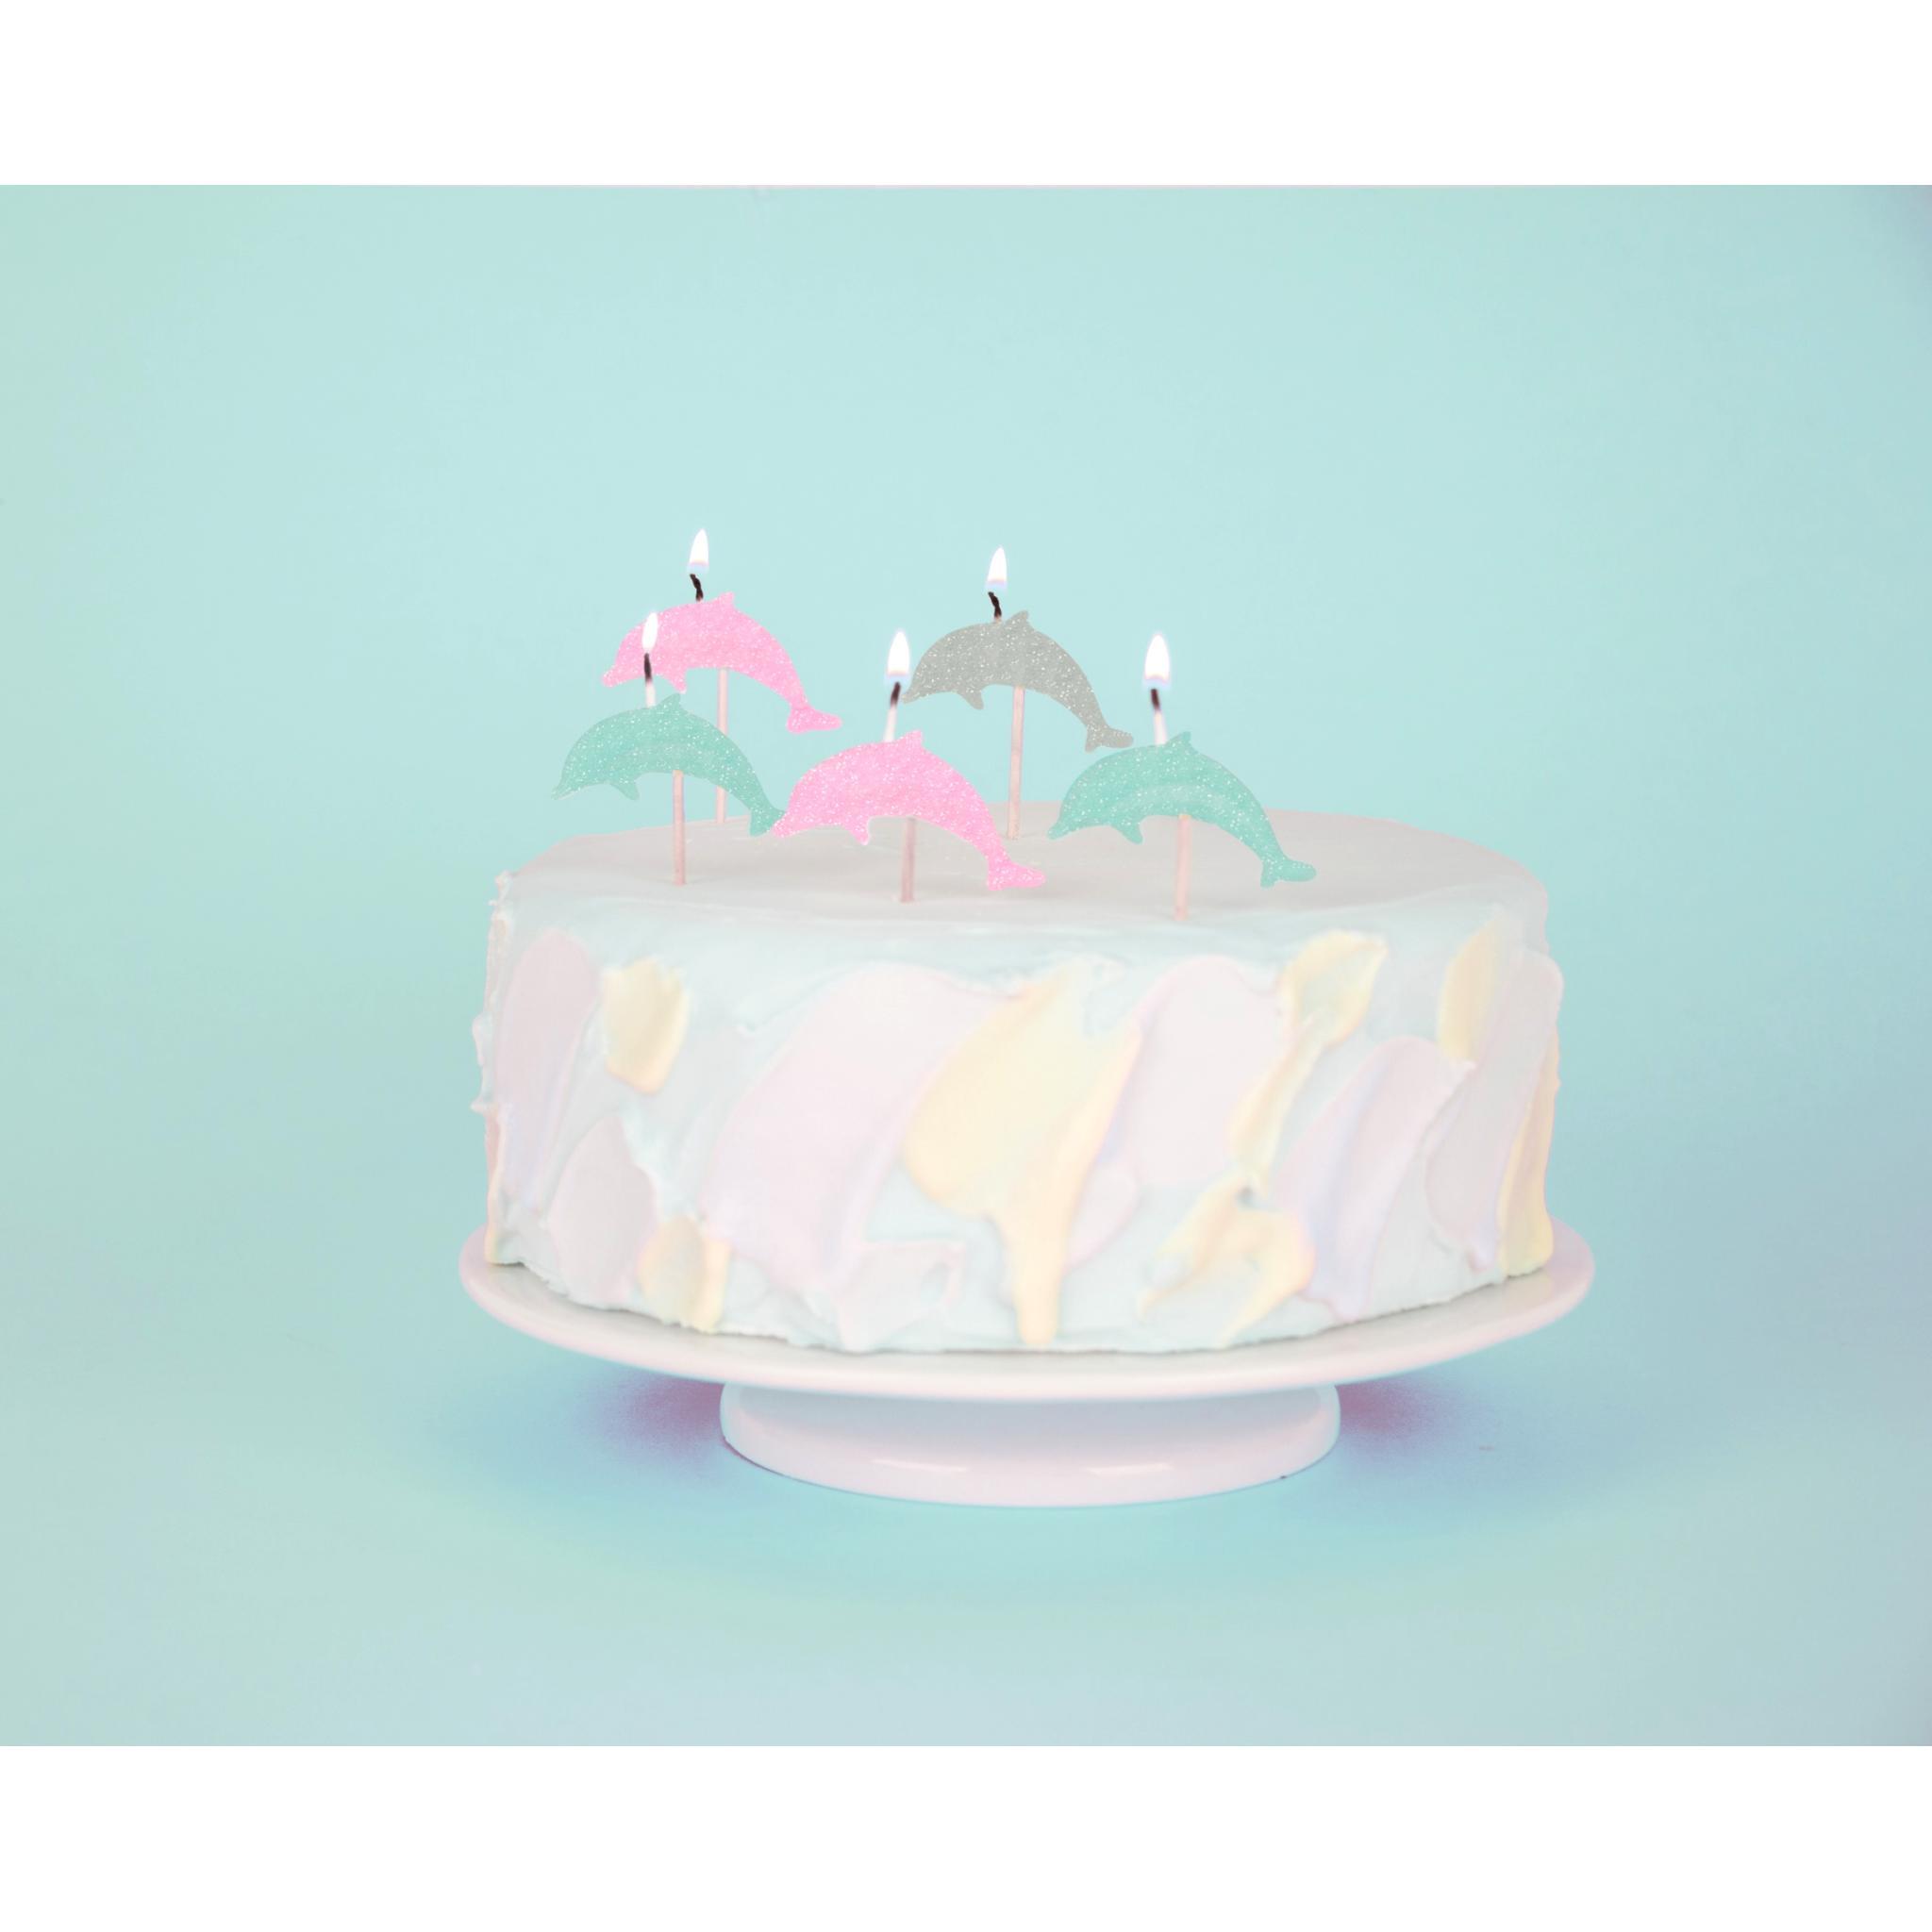 Decora tu Pastel: Velas para pastel de Delfínes - Party Art